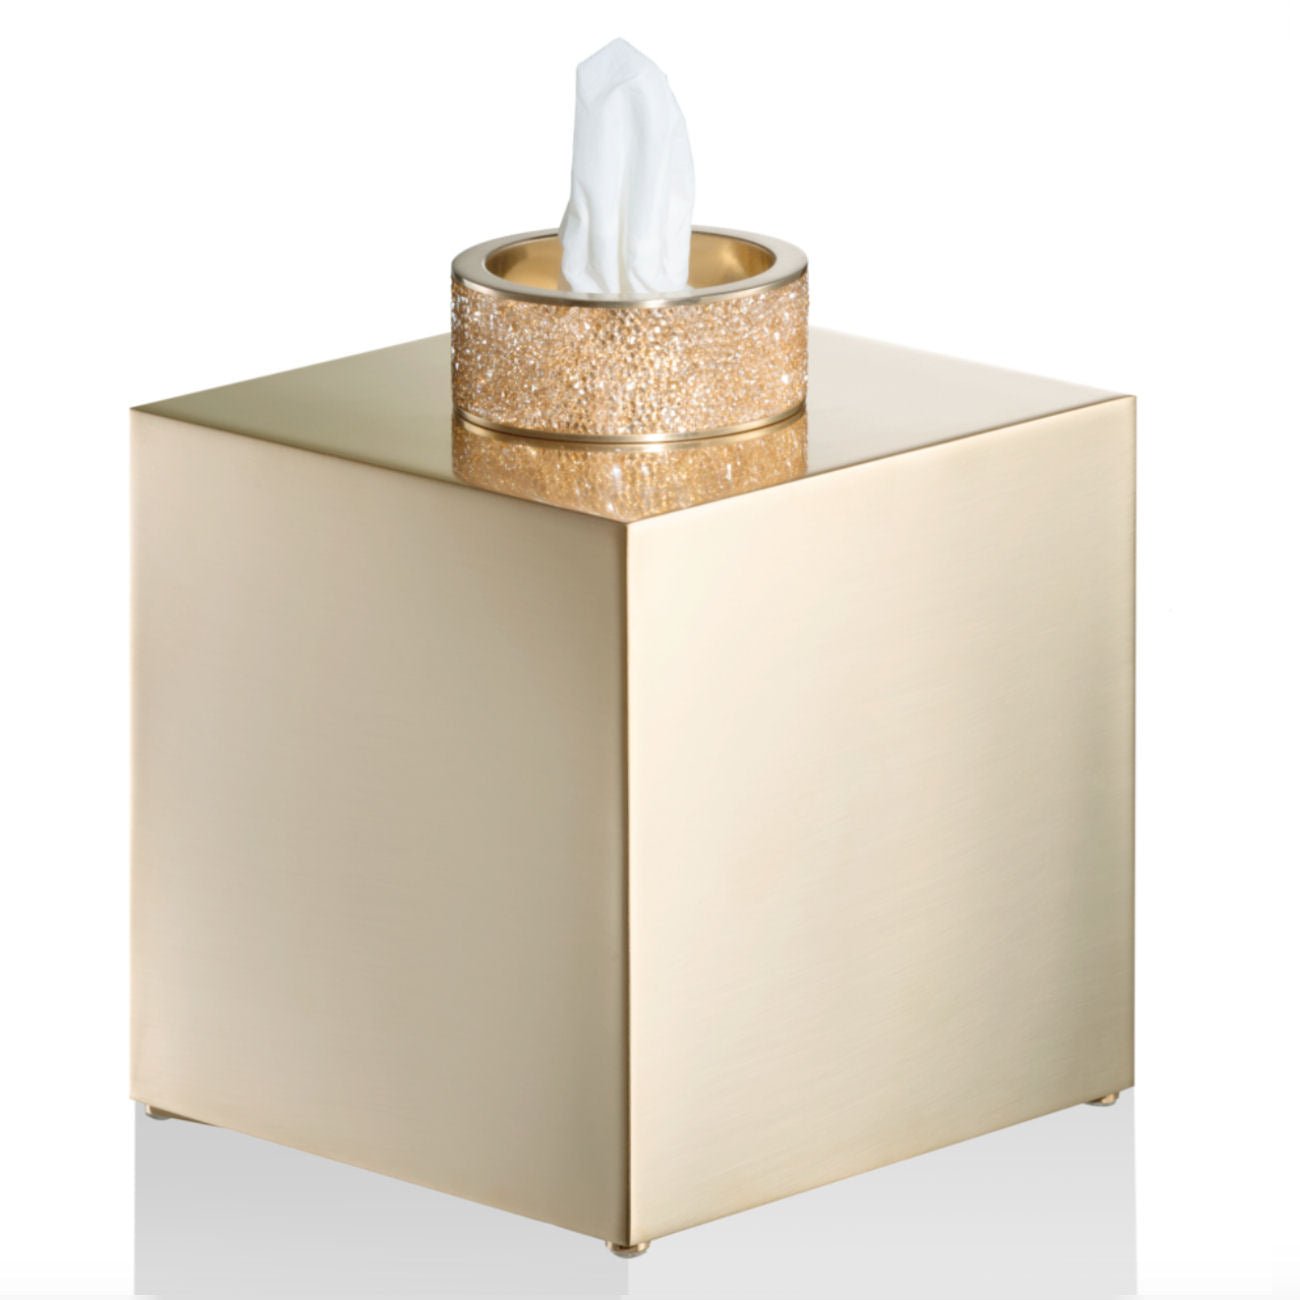 Luxury Matt Gold Tissue Box Swarowski® Crystal - |VESIMI Design|